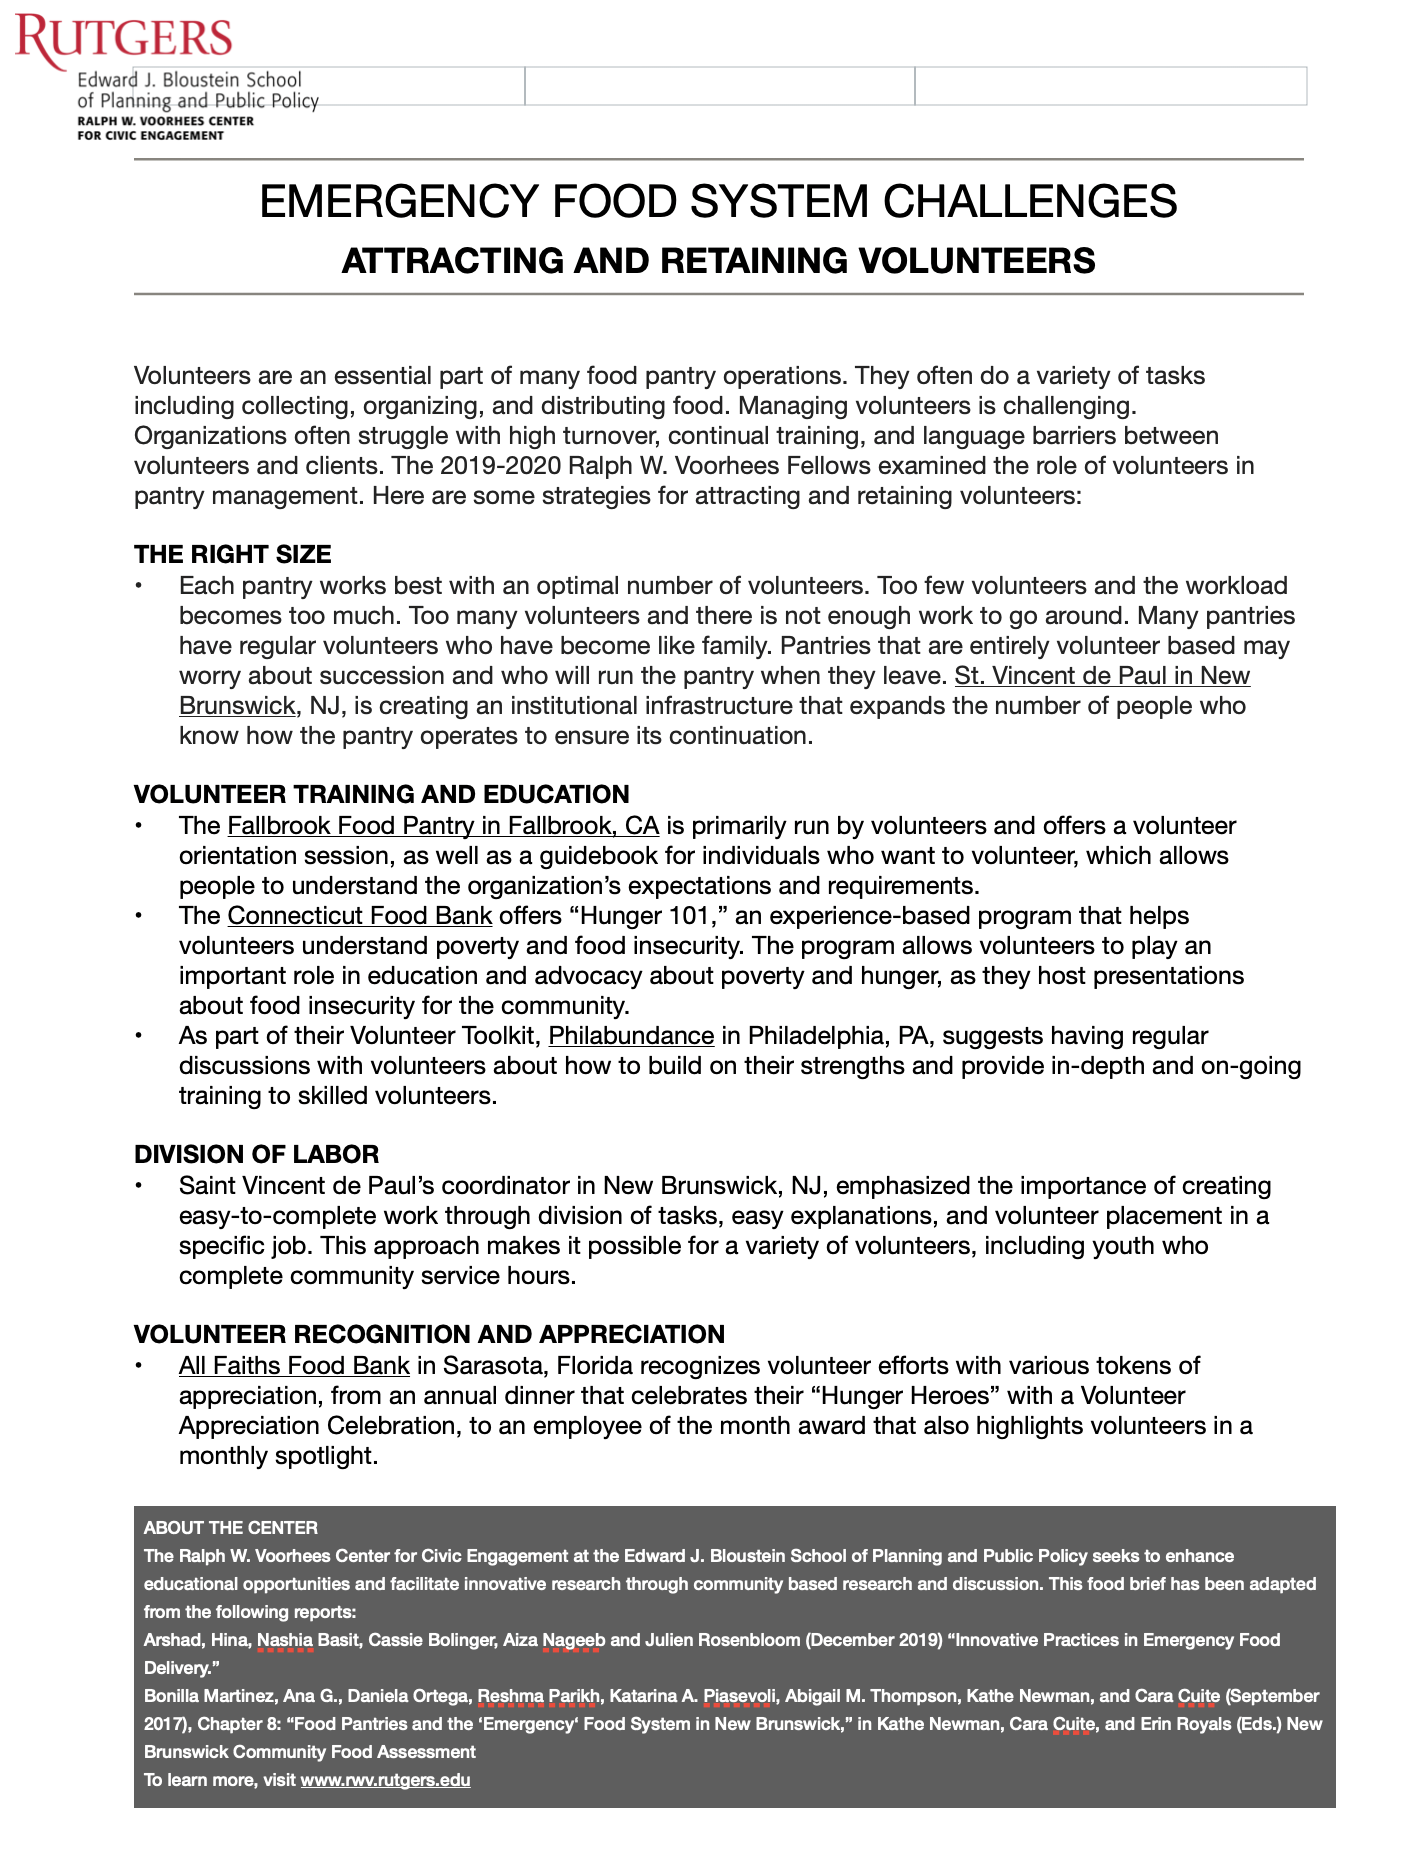 Attracting & Retaining Volunteers